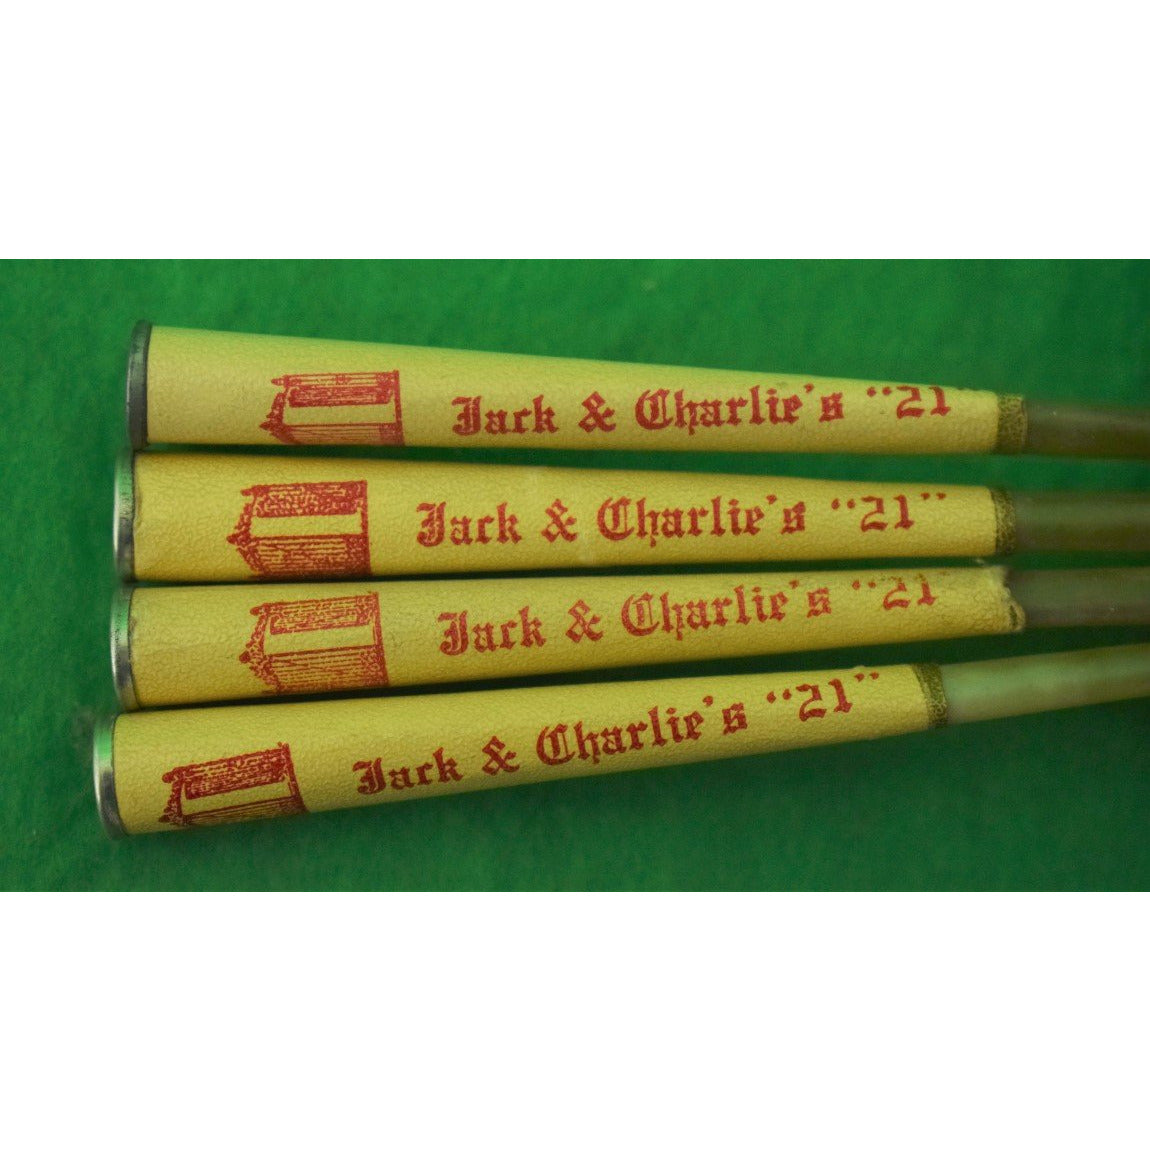 21 Jack & Charlie's Club 16 Cigarette Holders